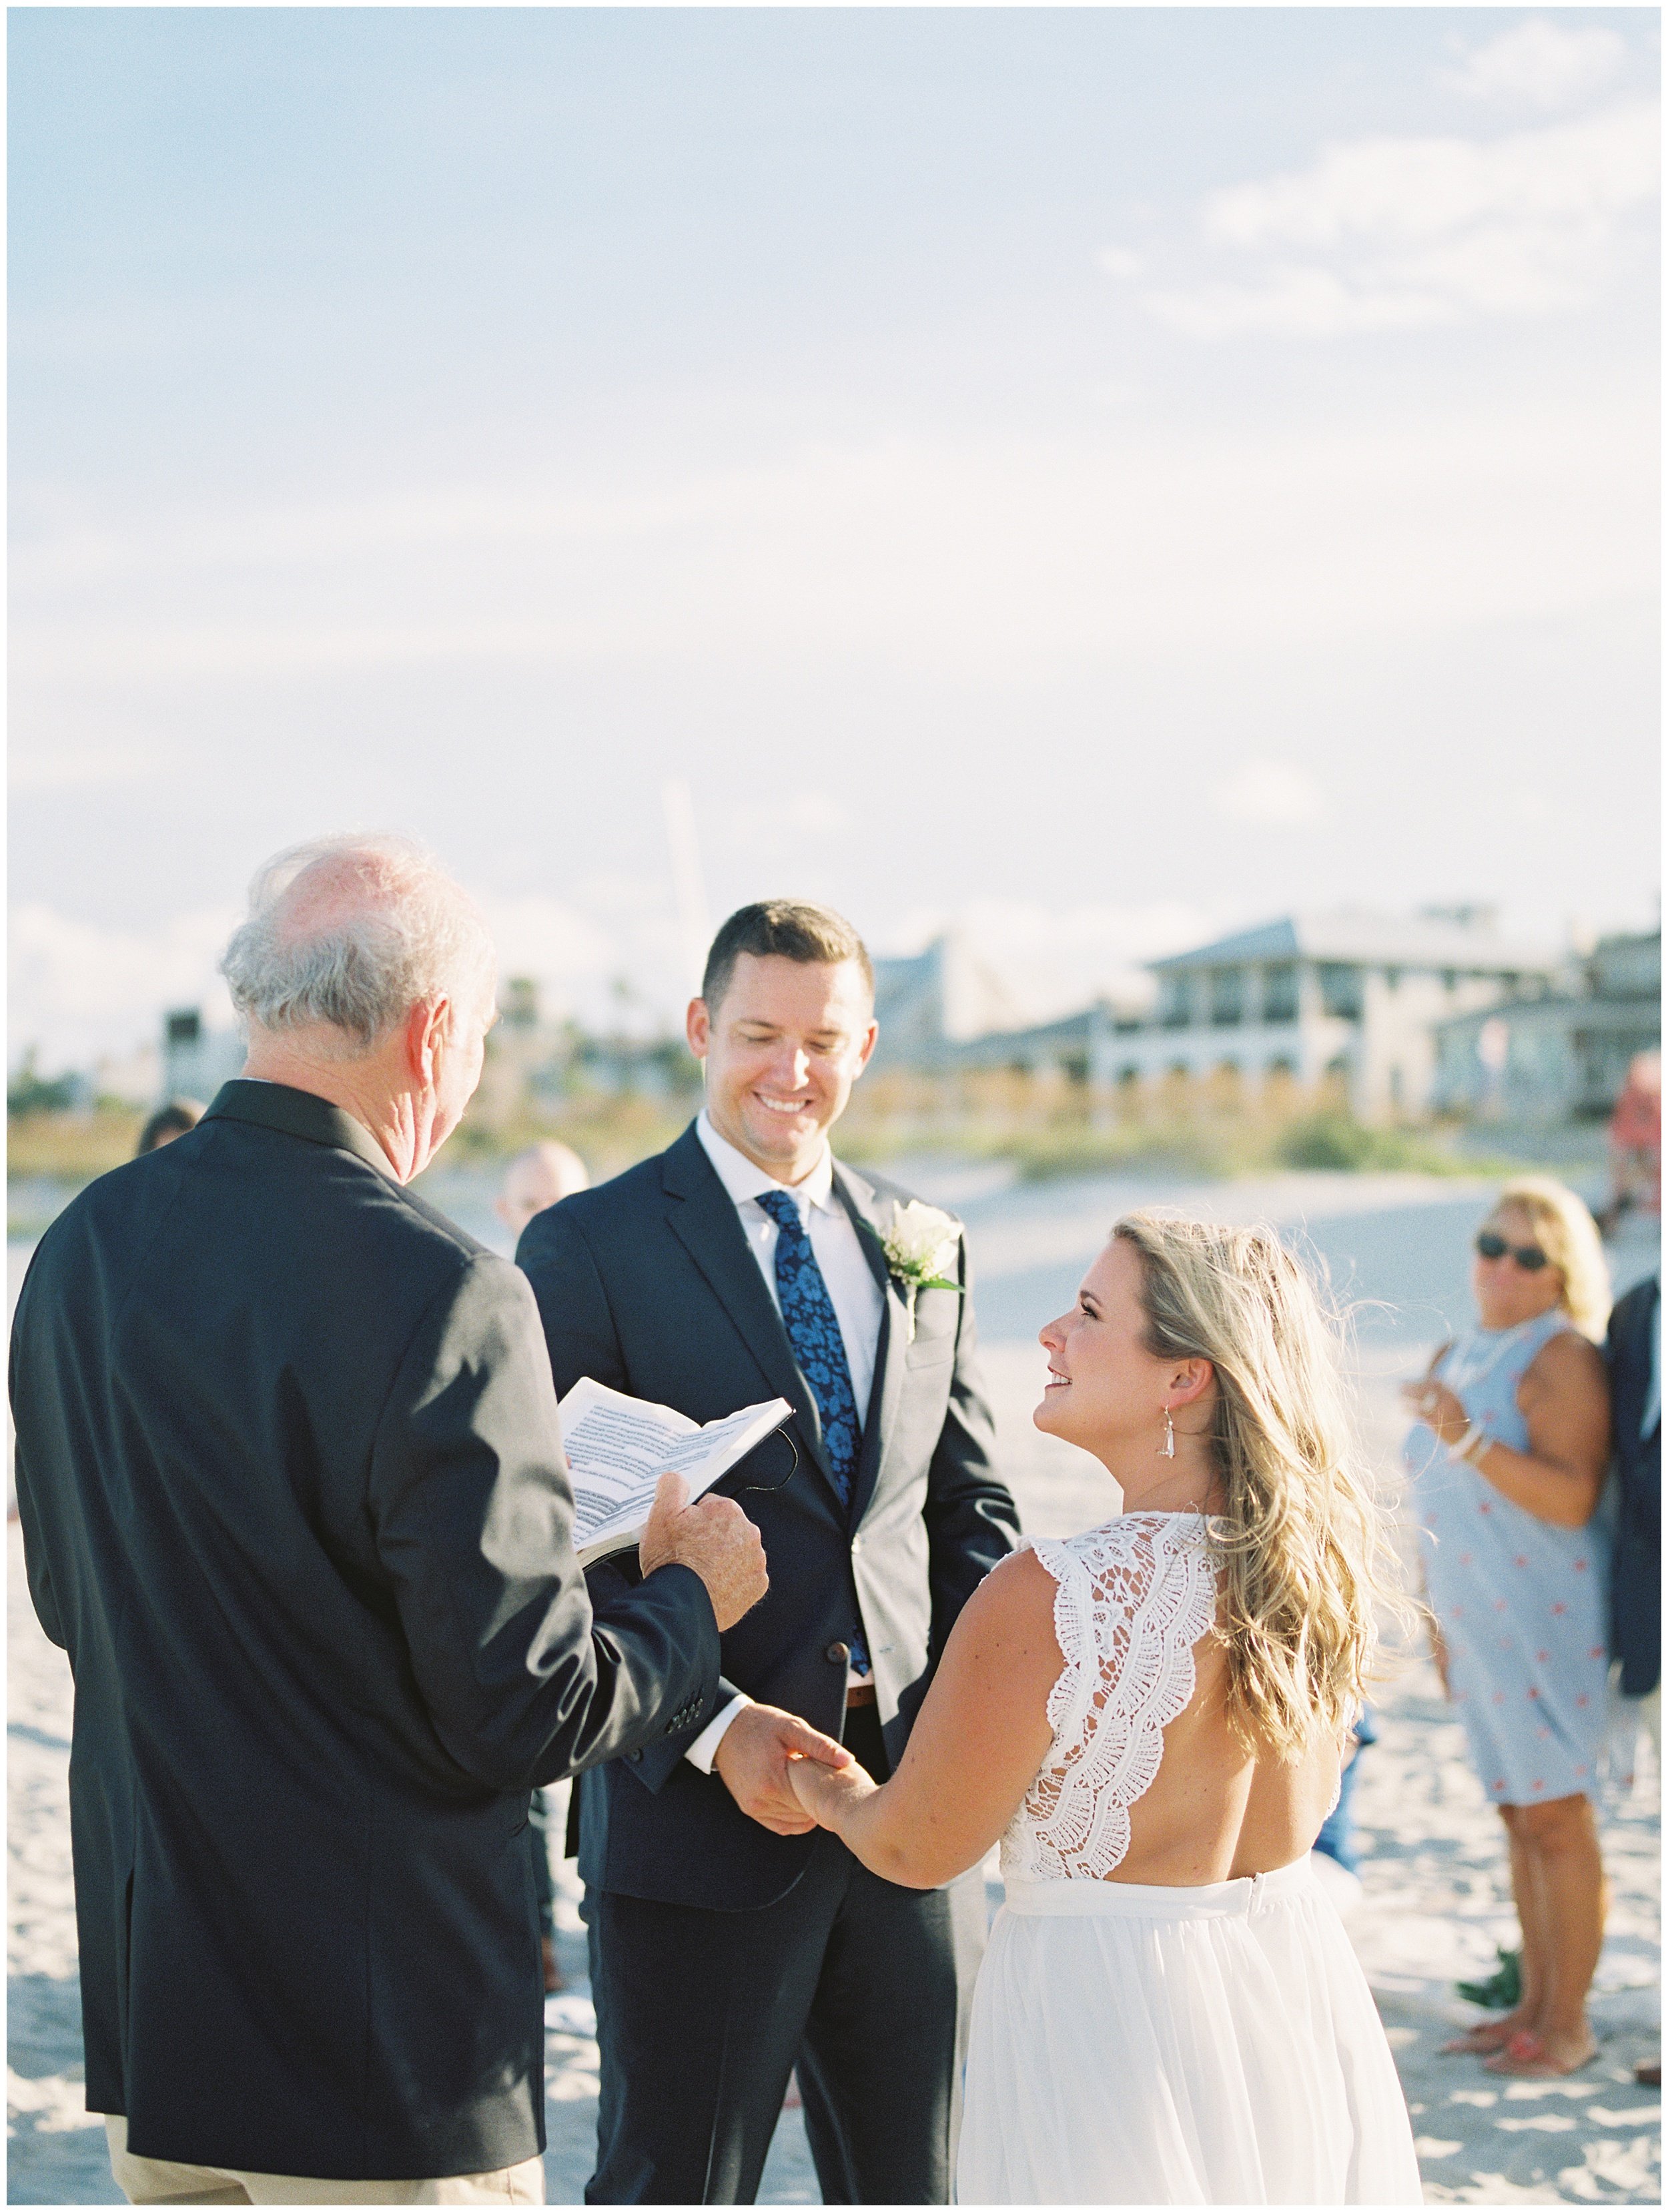 Lisa Silva Photography Jacksonville St Augustine Amelia Island Ponte Vedra Beach Fine Art Film Wedding Photographer- Atlantic Beach Elopement Photographer_0064.jpg